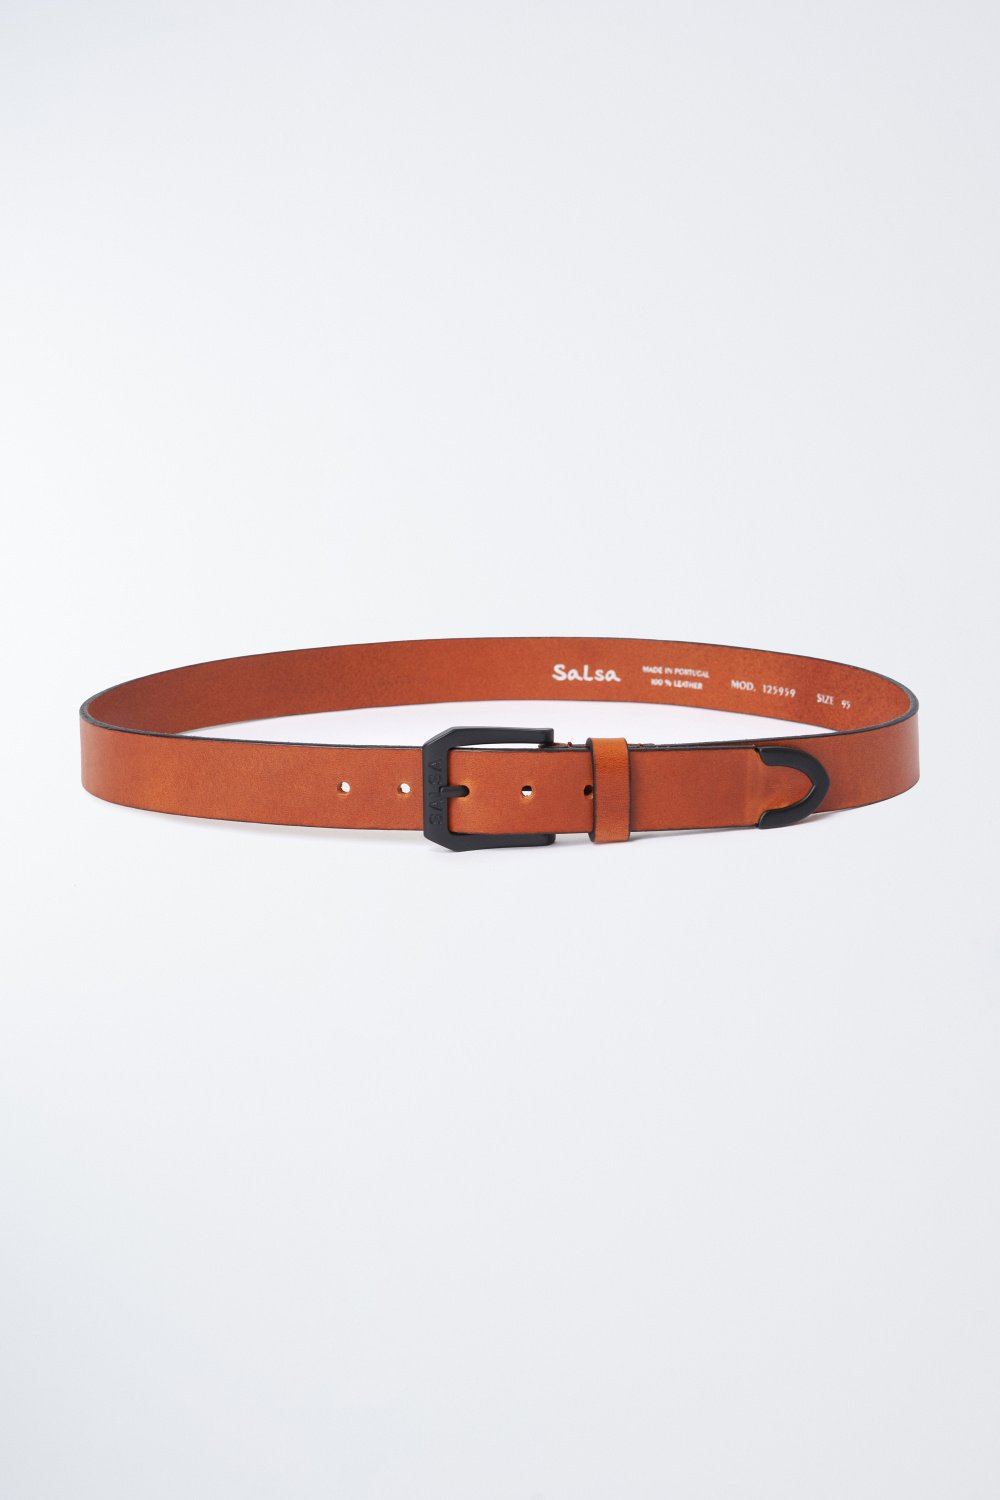 Premium leather belt, Texan inspiration - Salsa